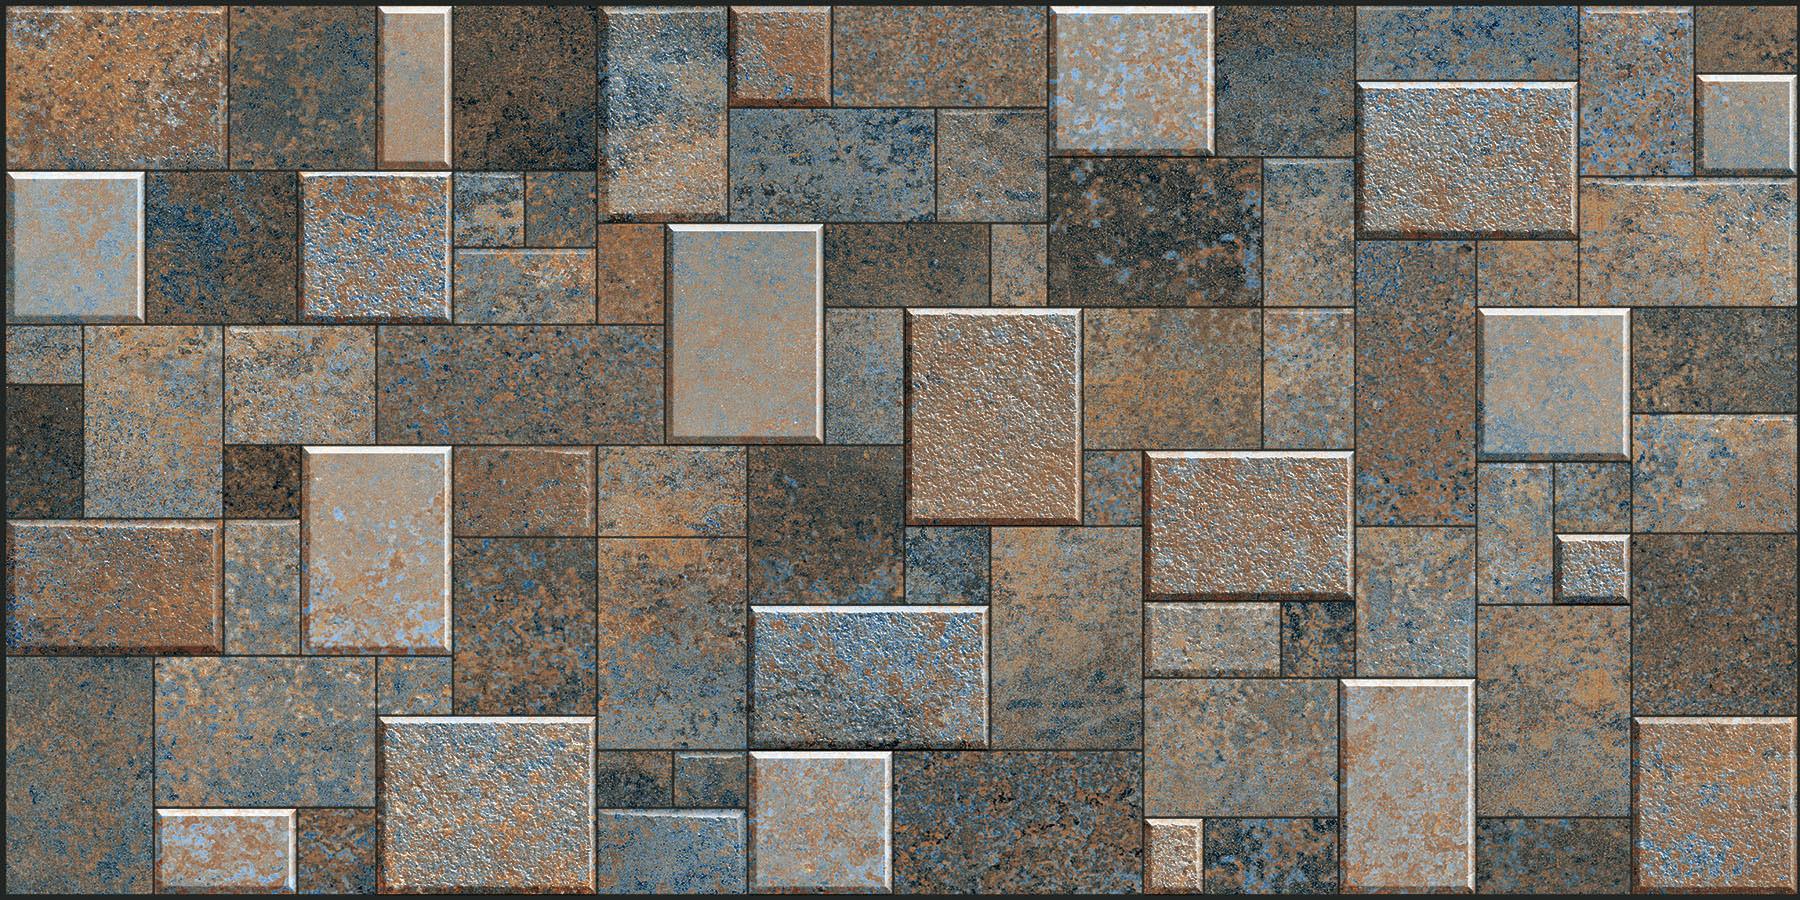 Stone Tiles for Bathroom Tiles, Living Room Tiles, Elevation Tiles, Accent Tiles, Hospital Tiles, Bar/Restaurant, Commercial/Office, Outdoor Area, School & Collages